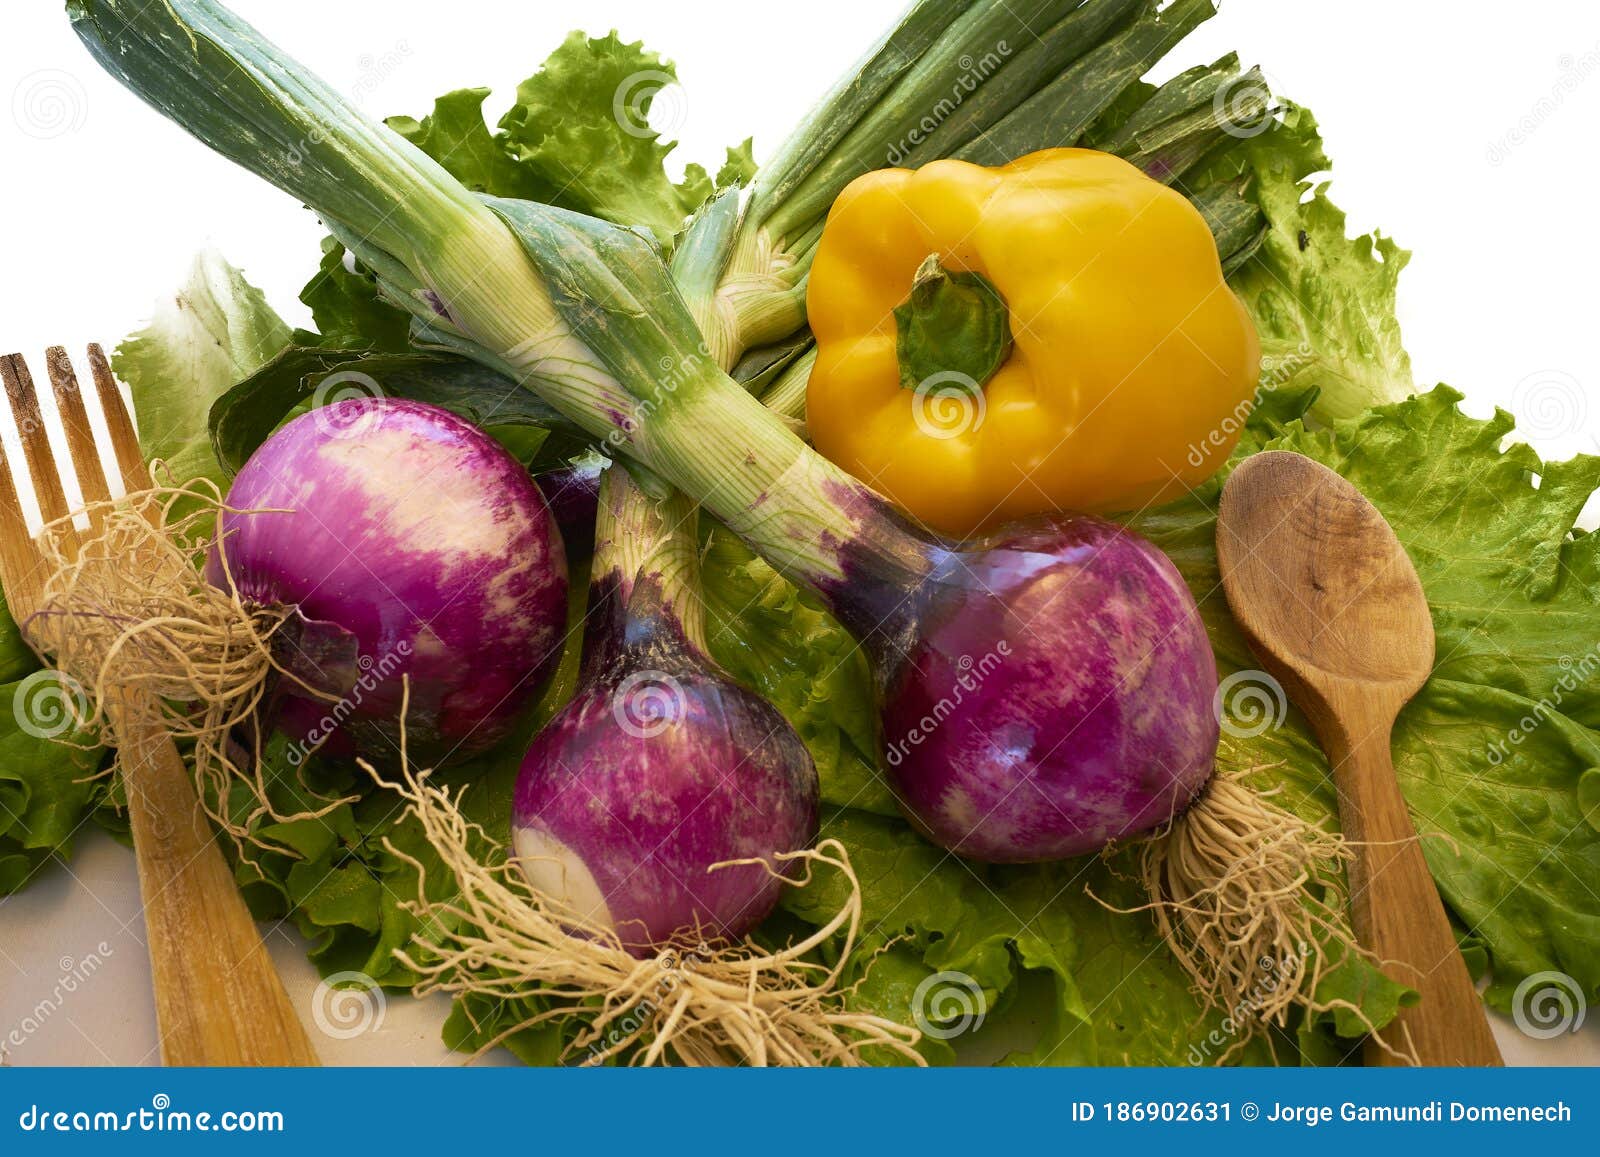 fresh fruits and vegetables on lettuce background